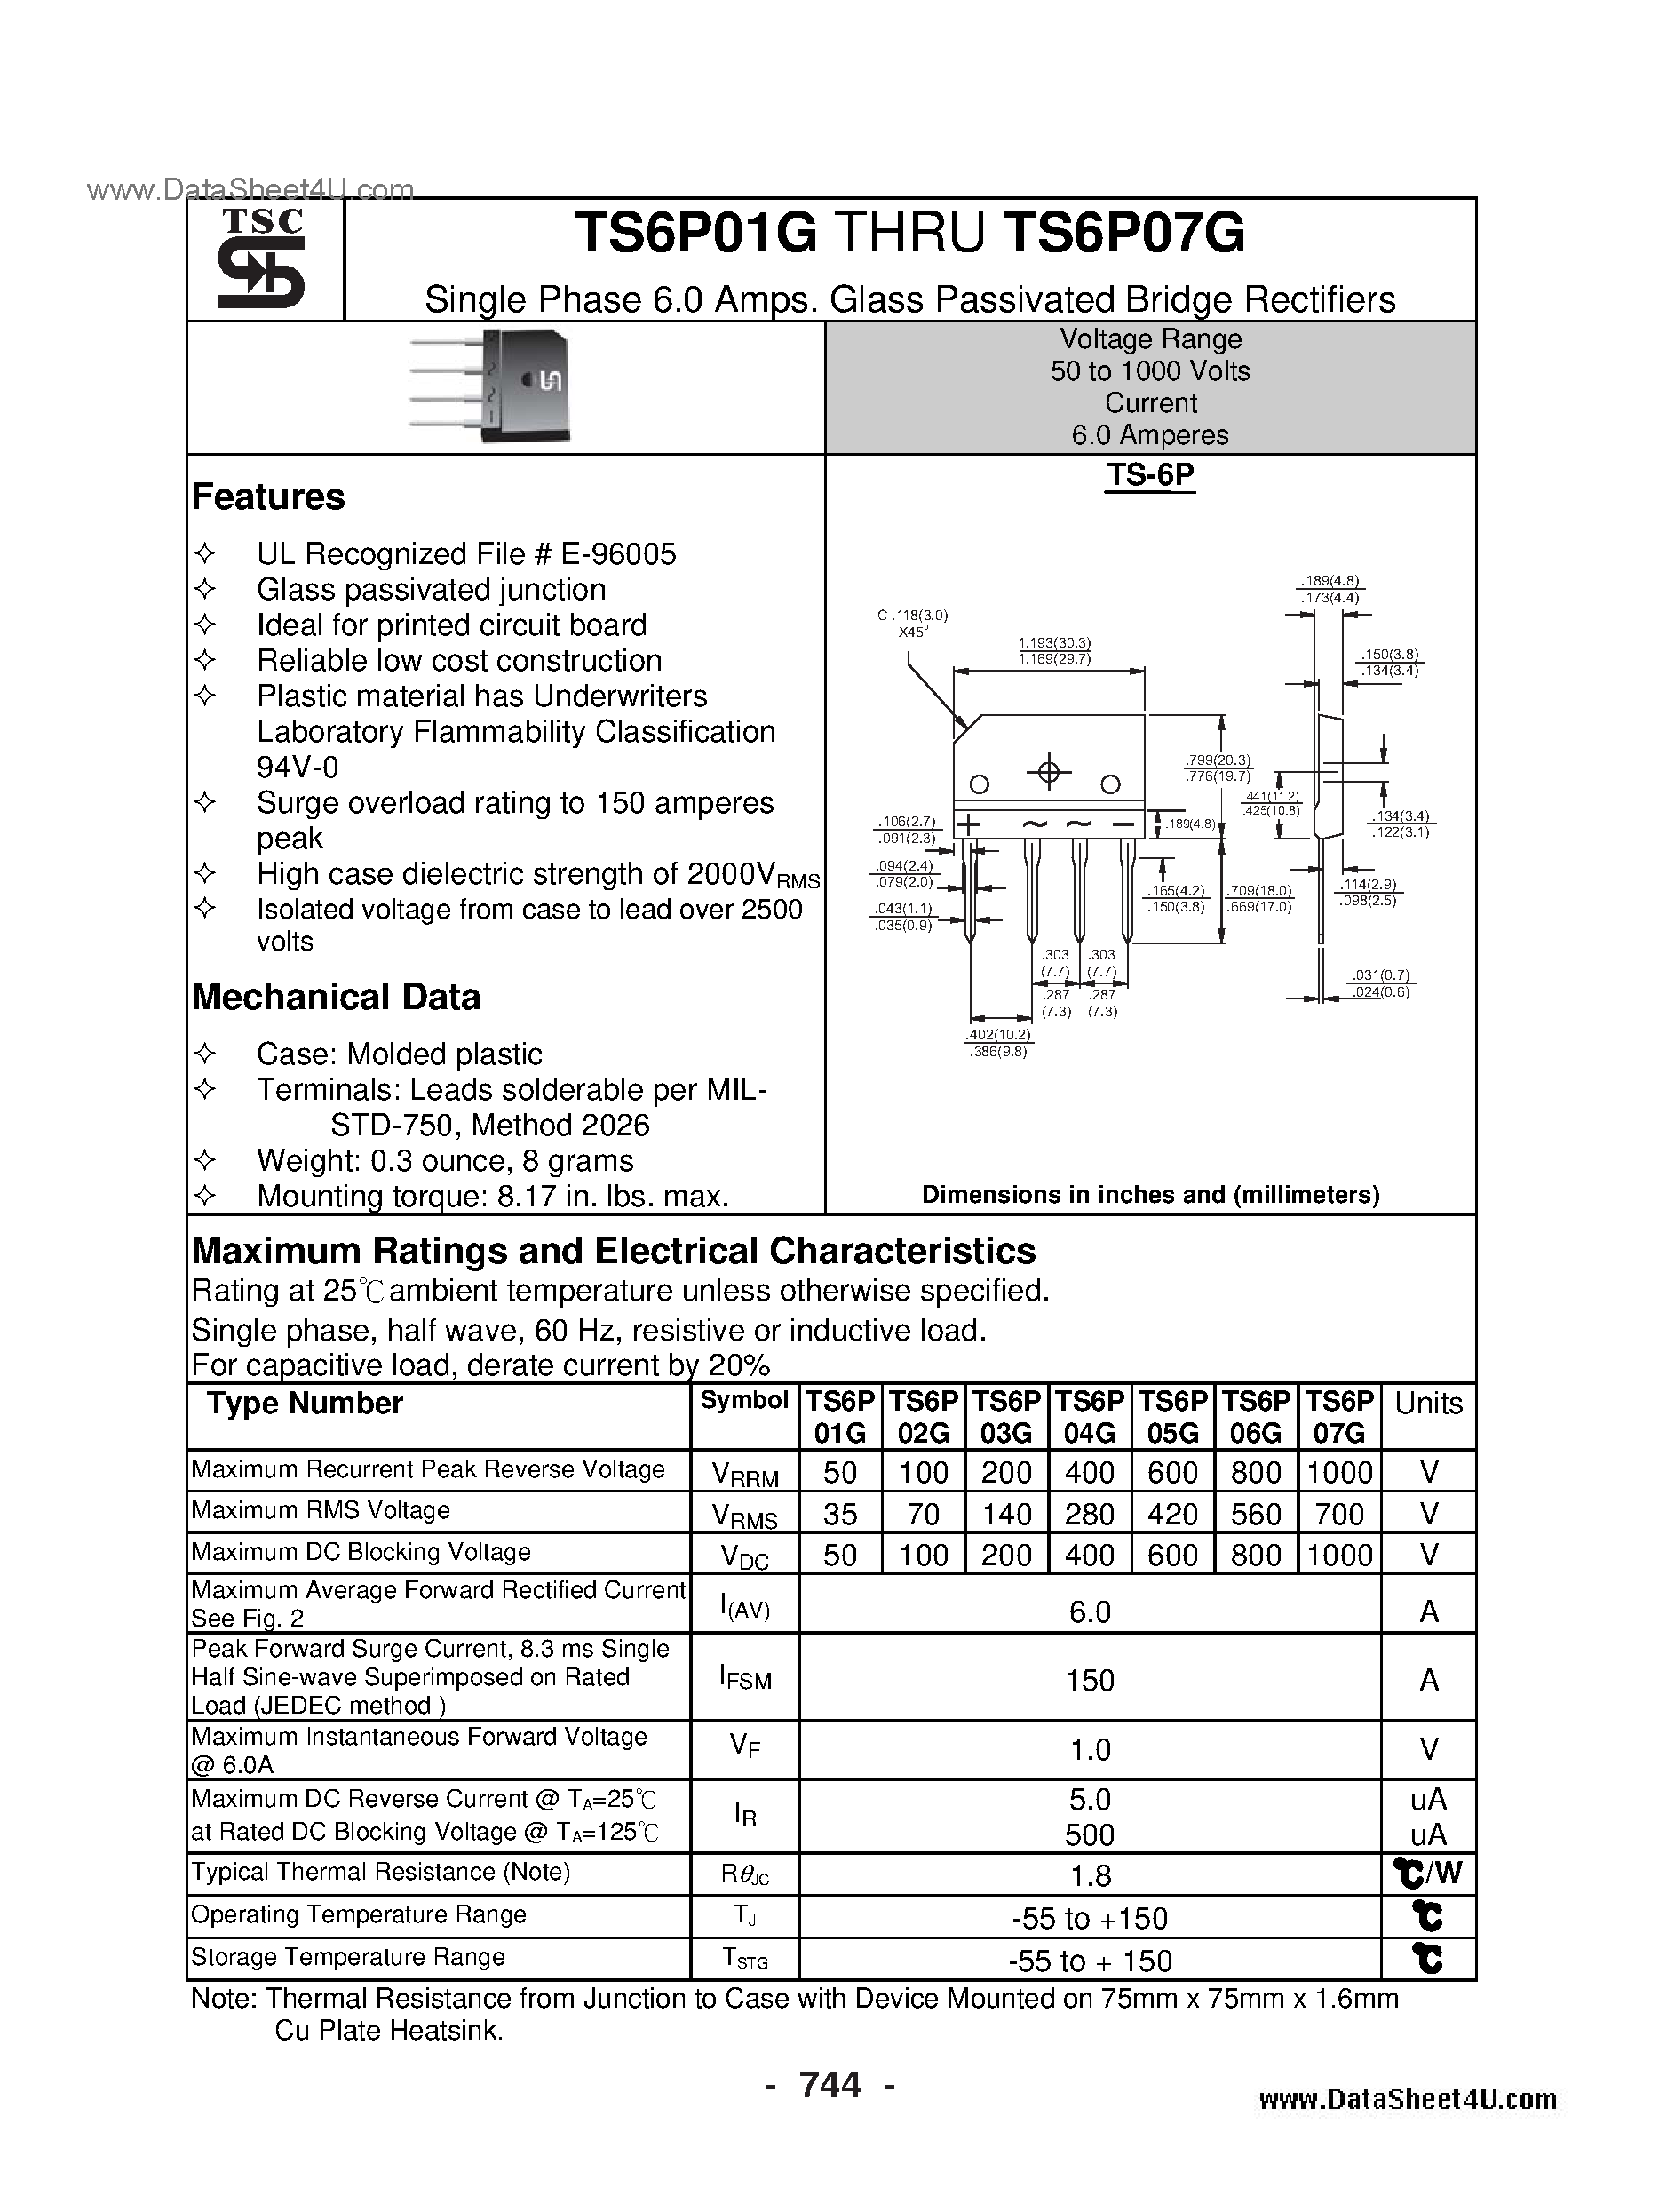 Datasheet TS6P01G - (TS6P01G - TS6P07G) Glass Passivated Bridge Rectifiers page 1